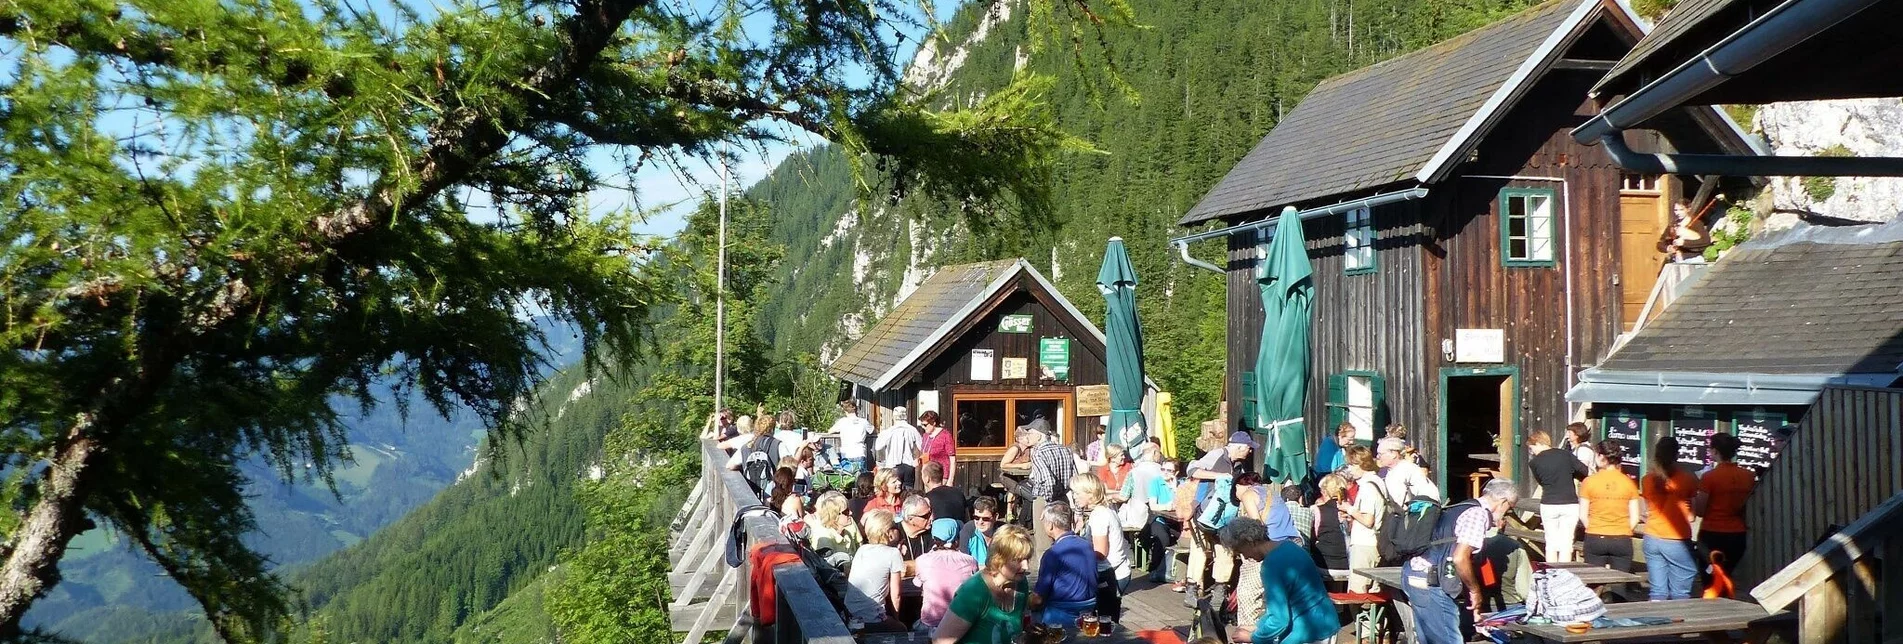 Berggasthof "Steirischer Jockl", Ausblick zum Hochlantsch-Gipfel | © Naturpark Almenland